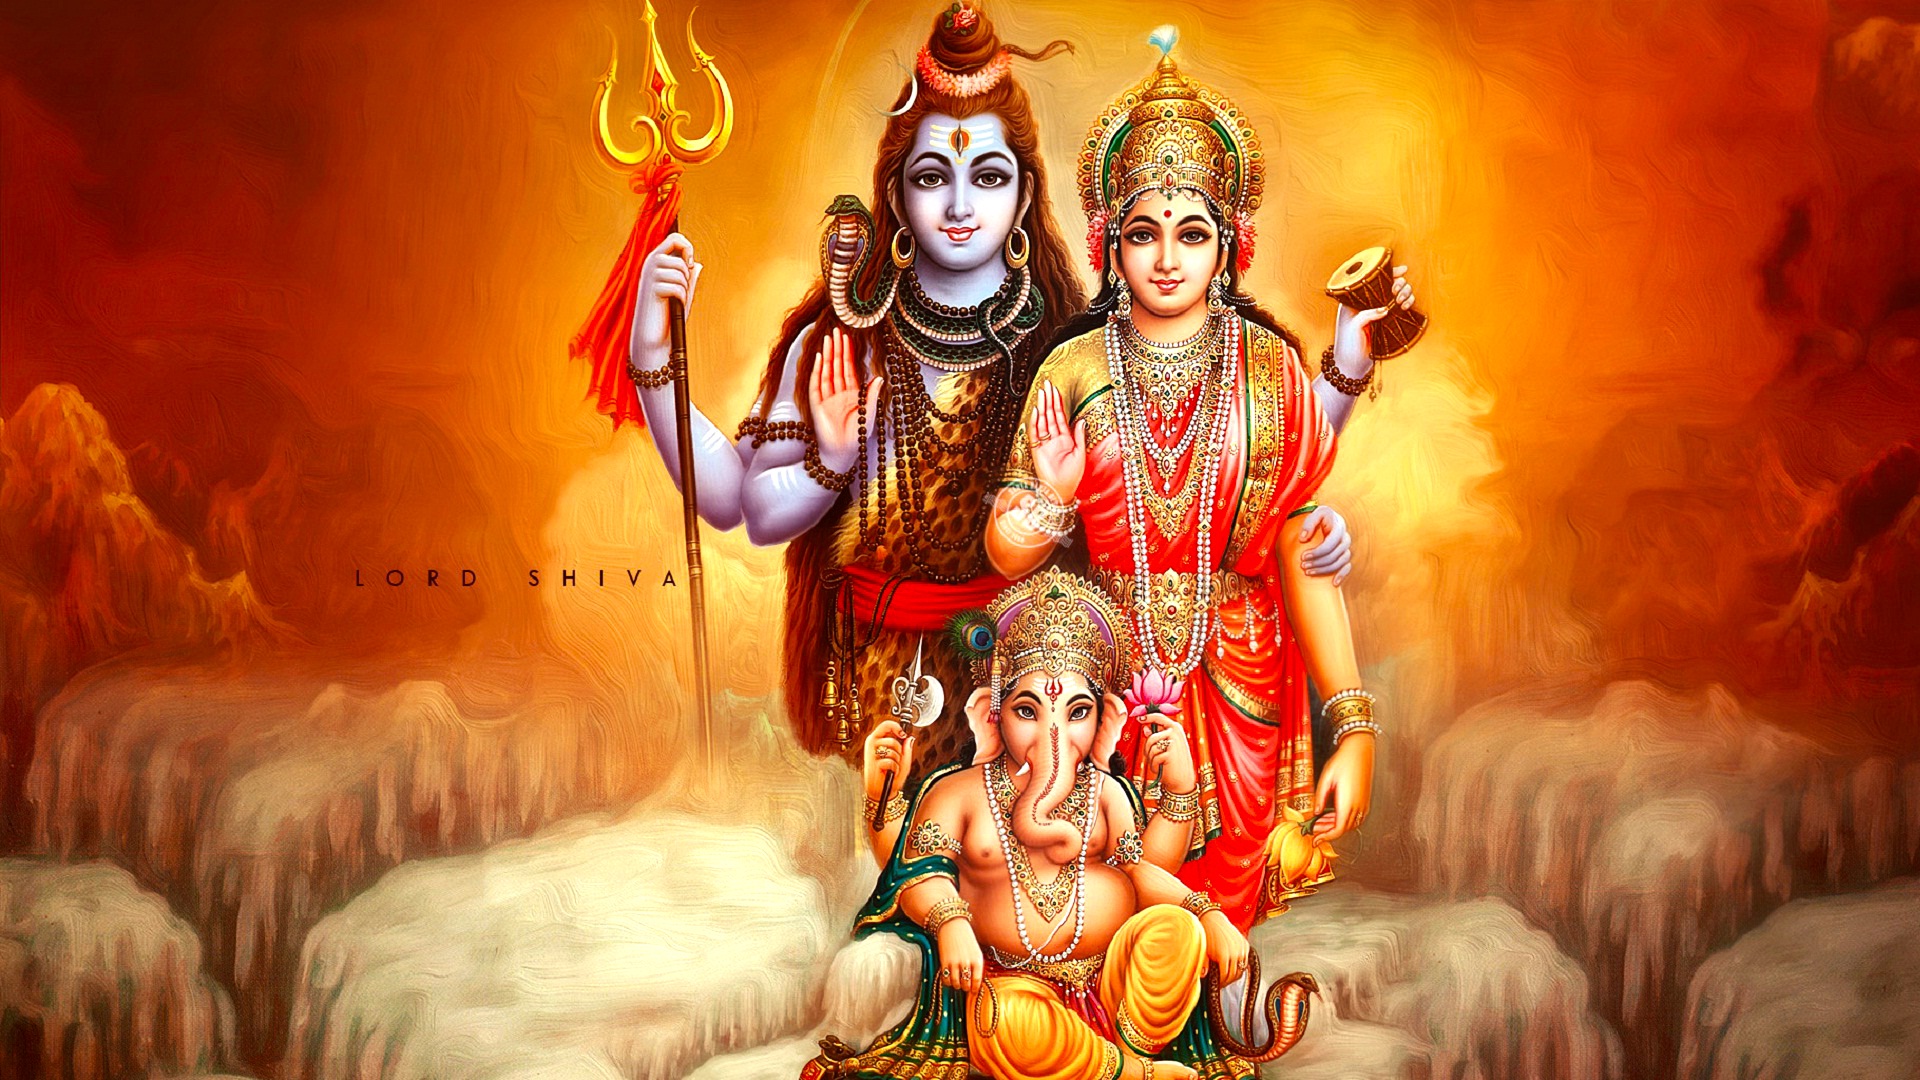 Lord Shiva Desktop Wallpaper | Hindu Gods and Goddesses